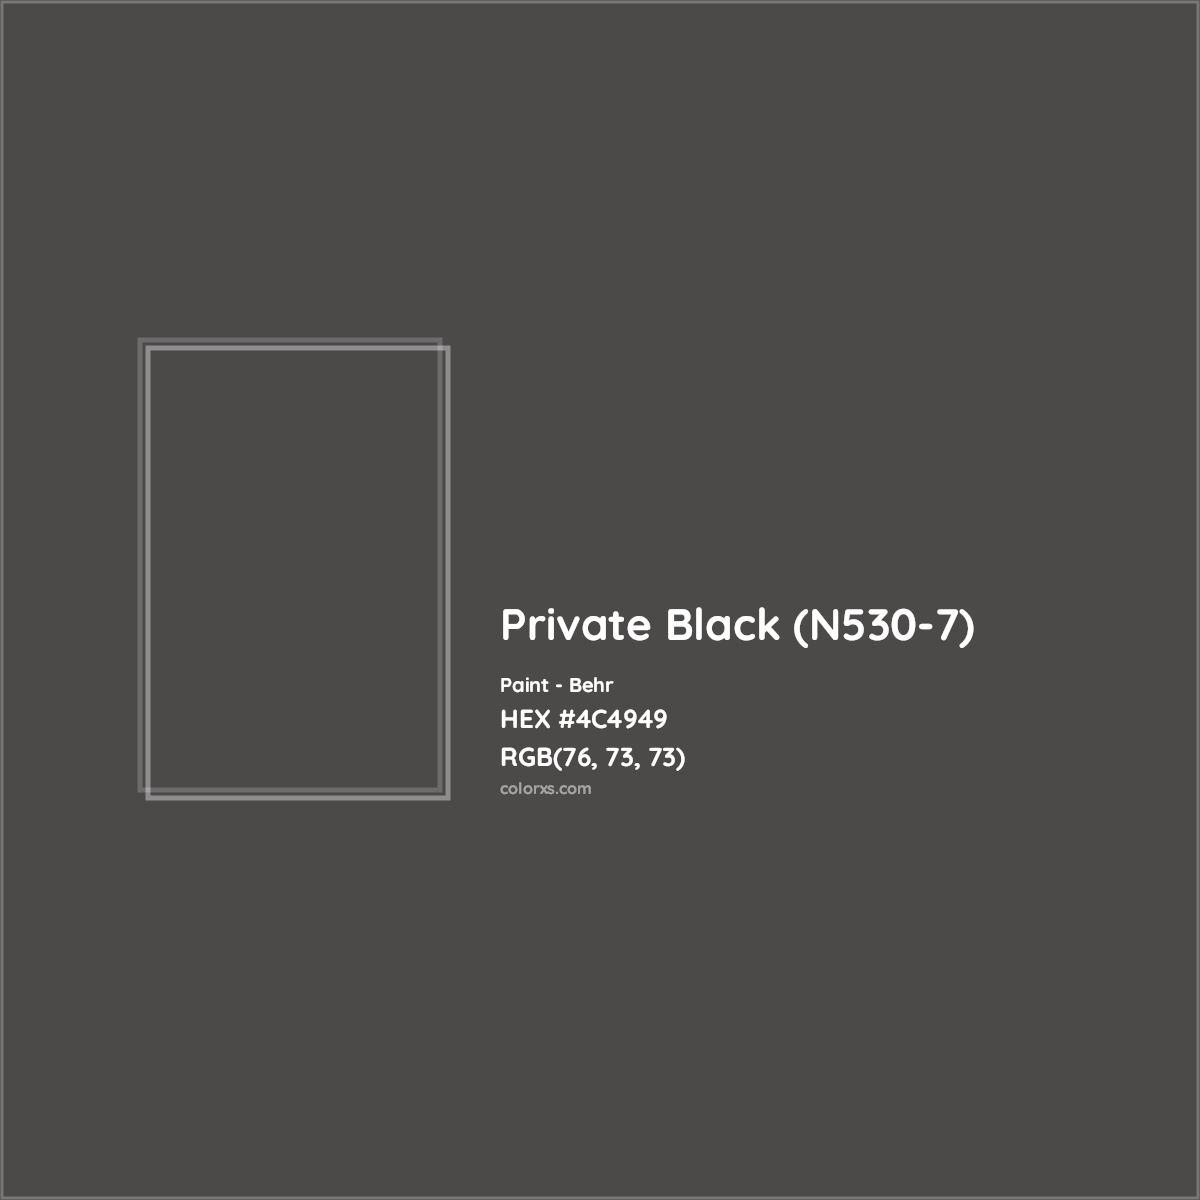 HEX #4C4949 Private Black (N530-7) Paint Behr - Color Code